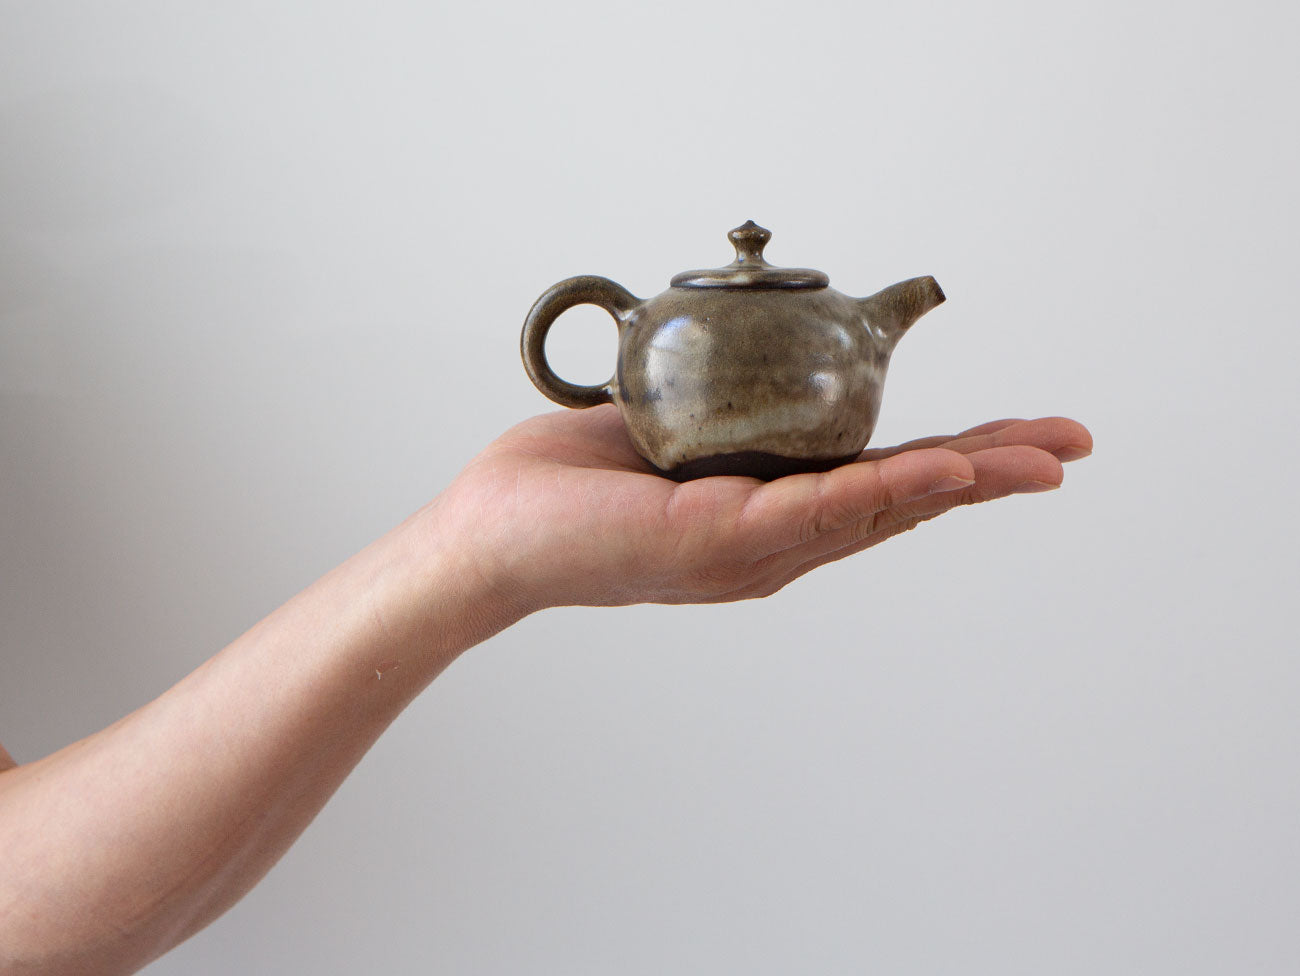 Wood-fired teapot, Constantin, Liao Guo Hua.